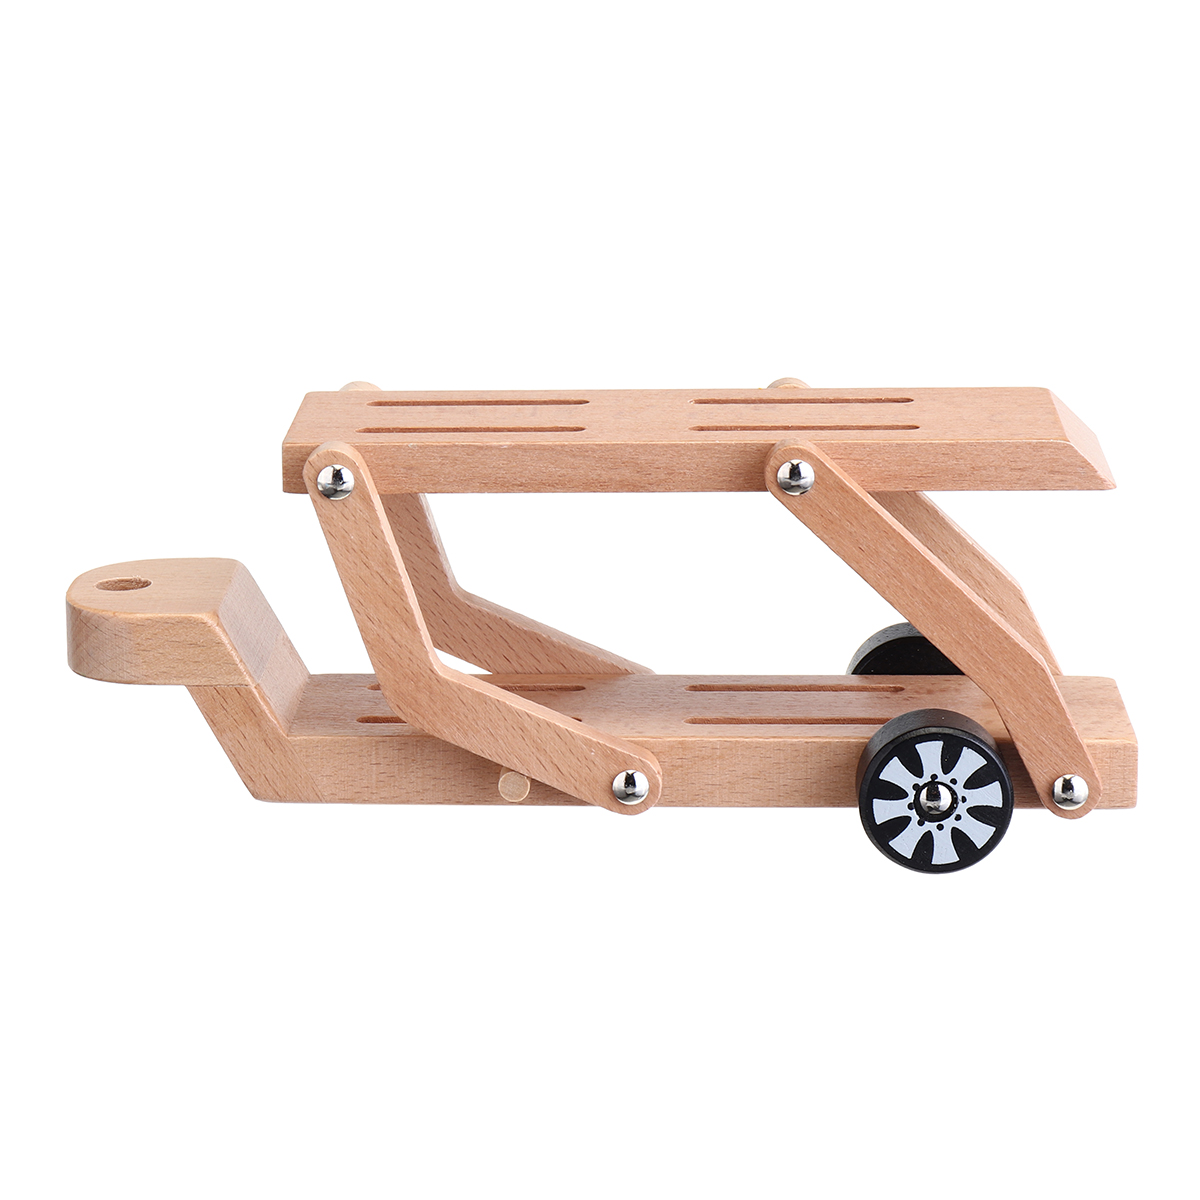 Beva-5-In-1-Truck-Model-Toy-Environmental-Wooden-Car-Load-Vehicle-Kid-Developmental-Toys-from-Xiaomi-1418866-10